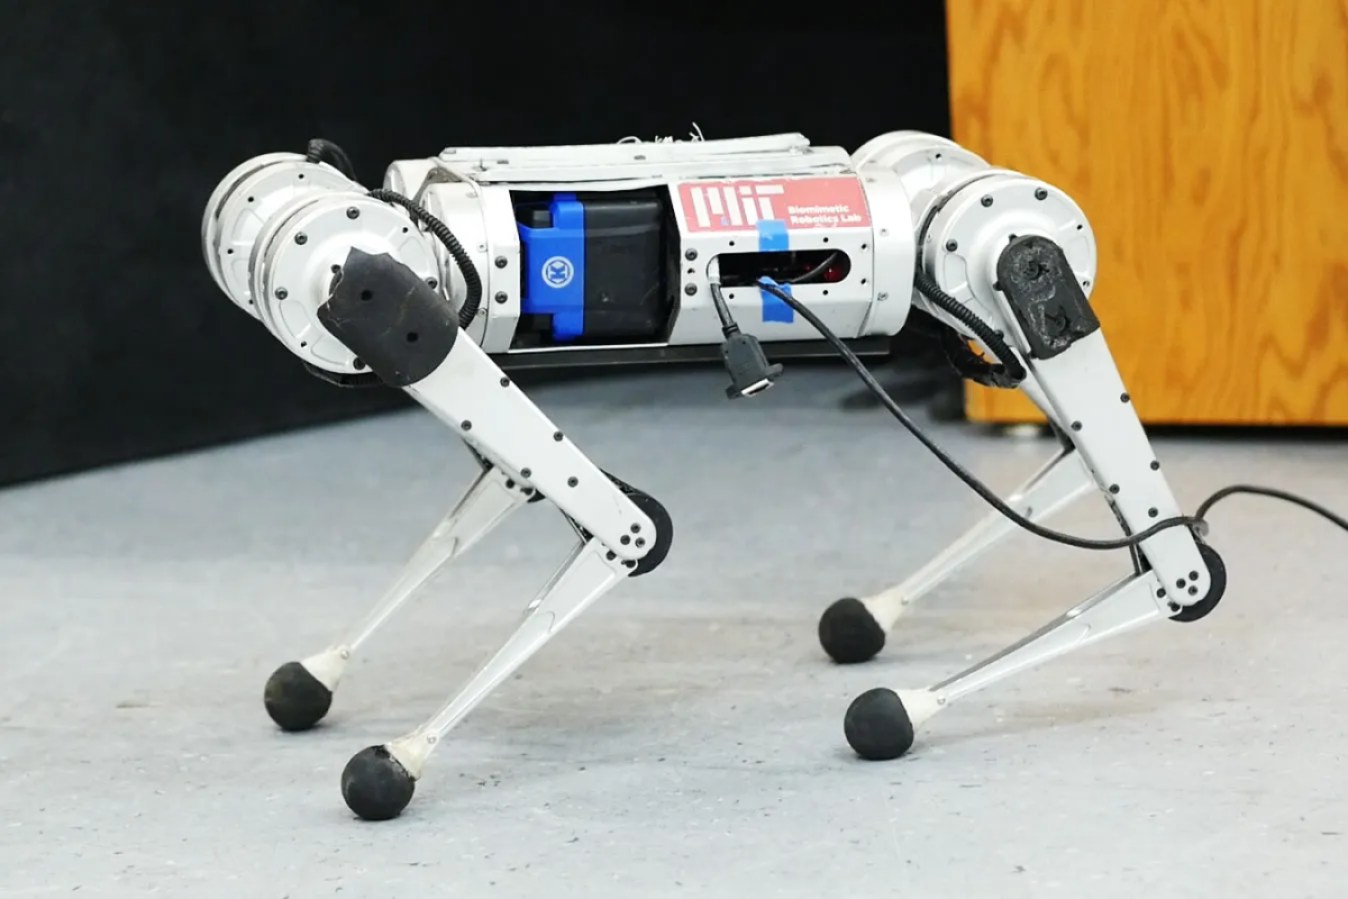 cheetah robot from MIT